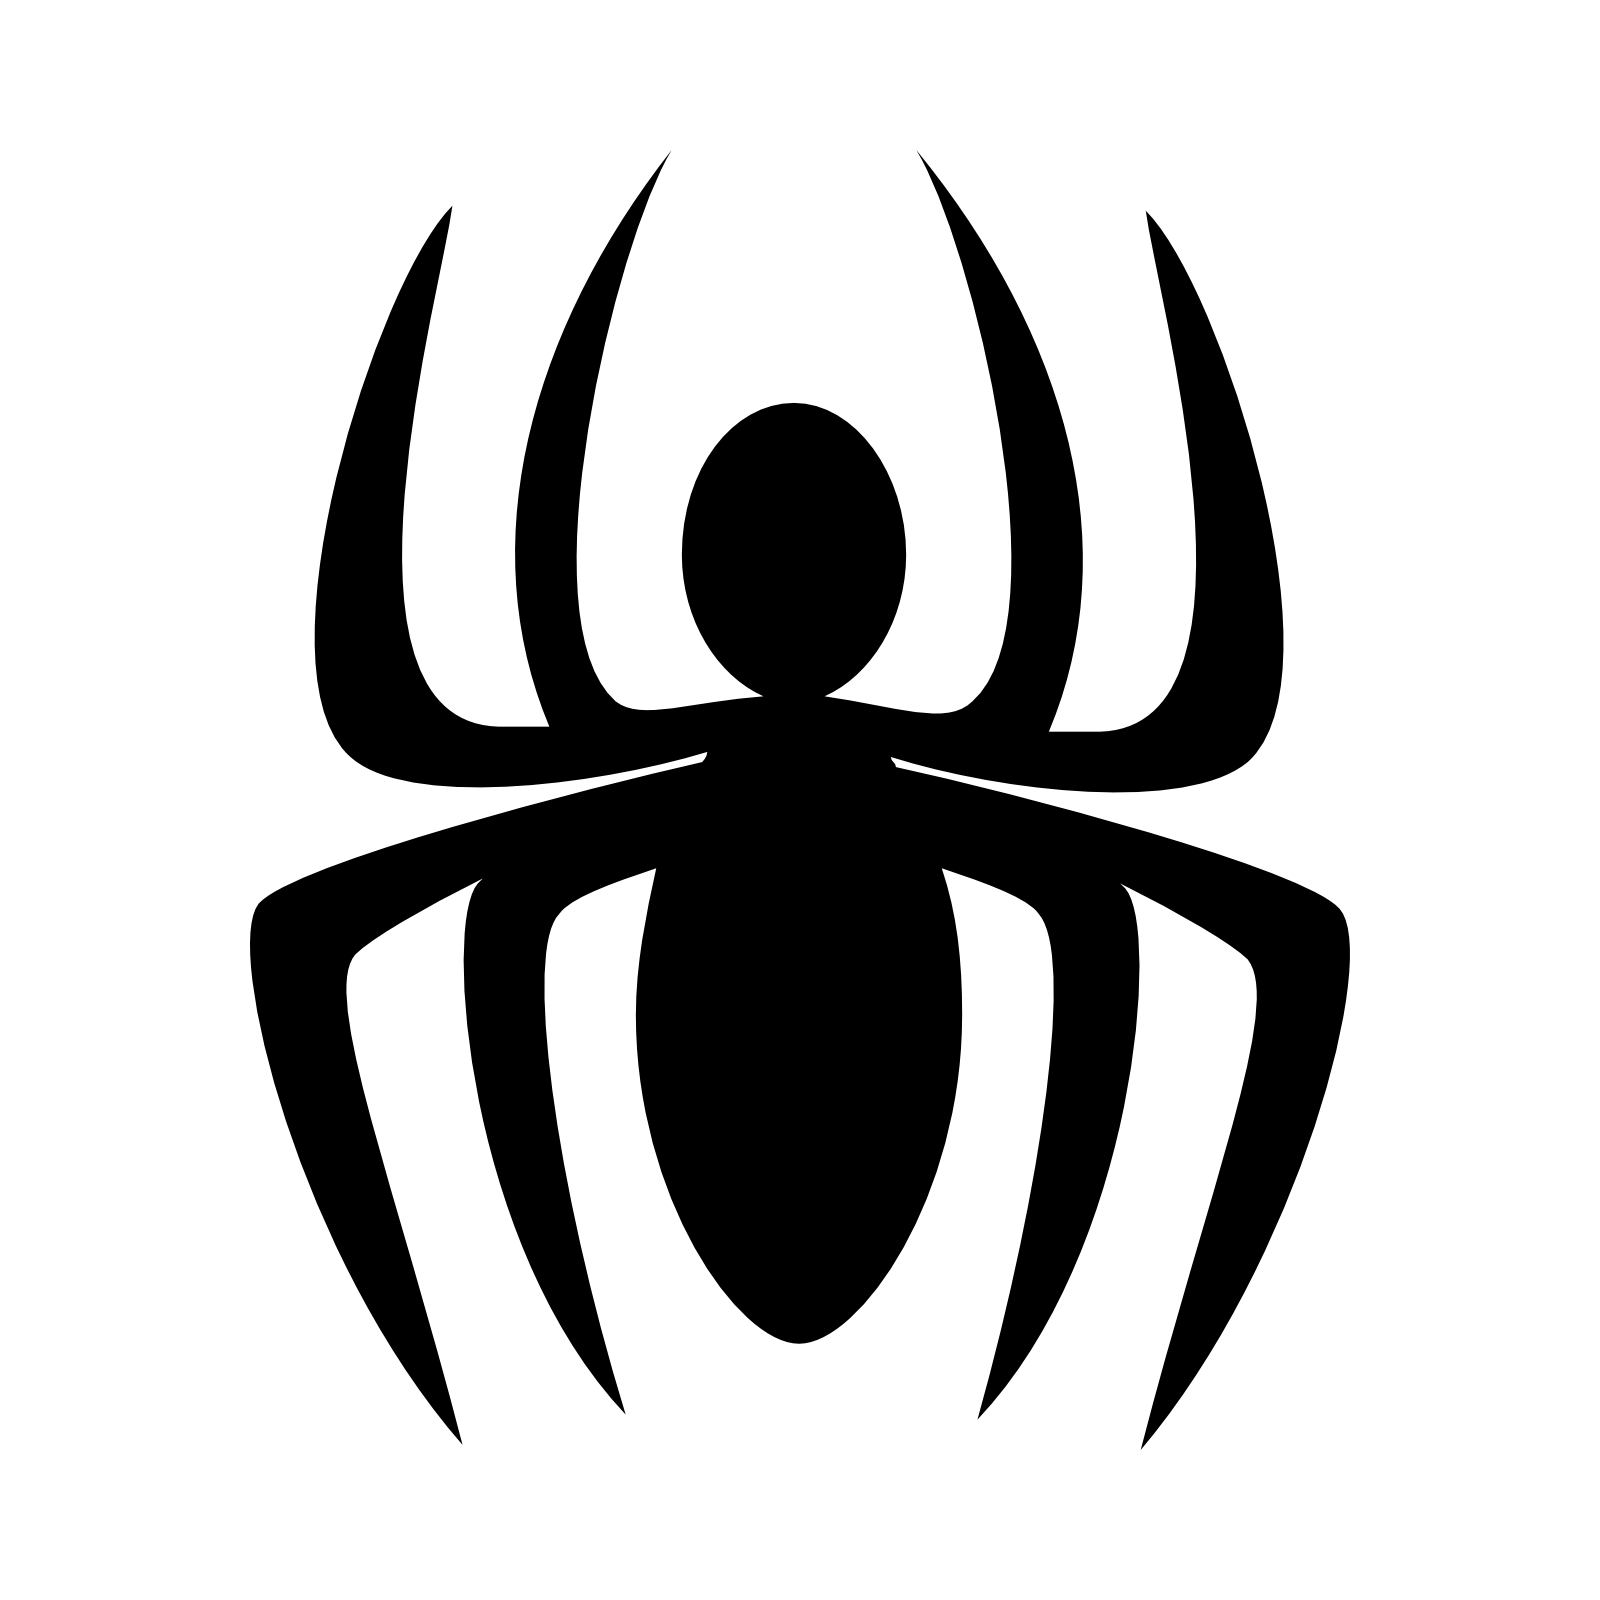 SpiderMan svg, Download SpiderMan svg for free 2019